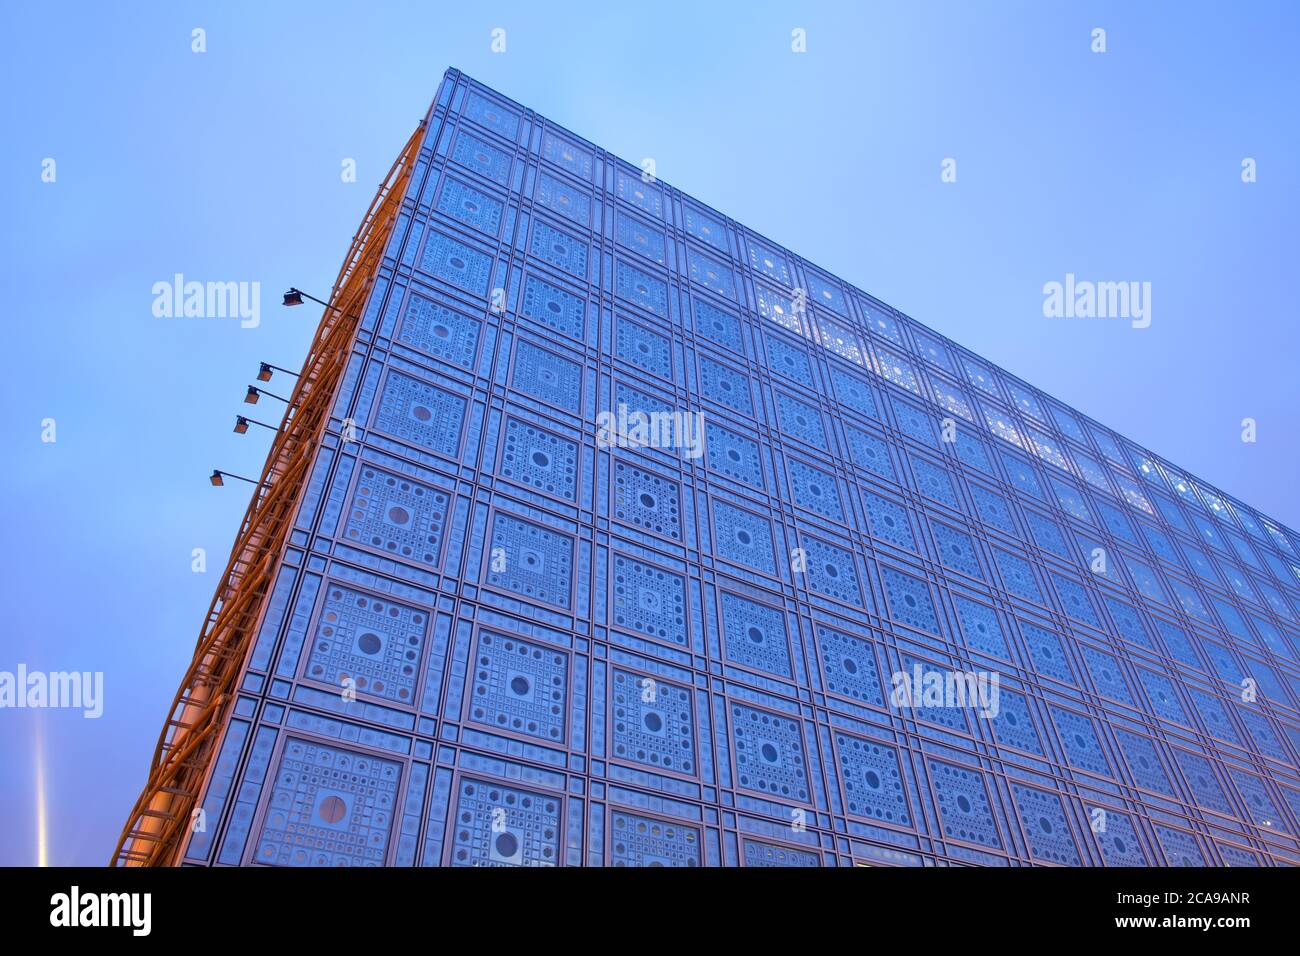 Paris, France - The light sensitive facade of The Institut du Monde Arabe (Arab World Institute). Stock Photo